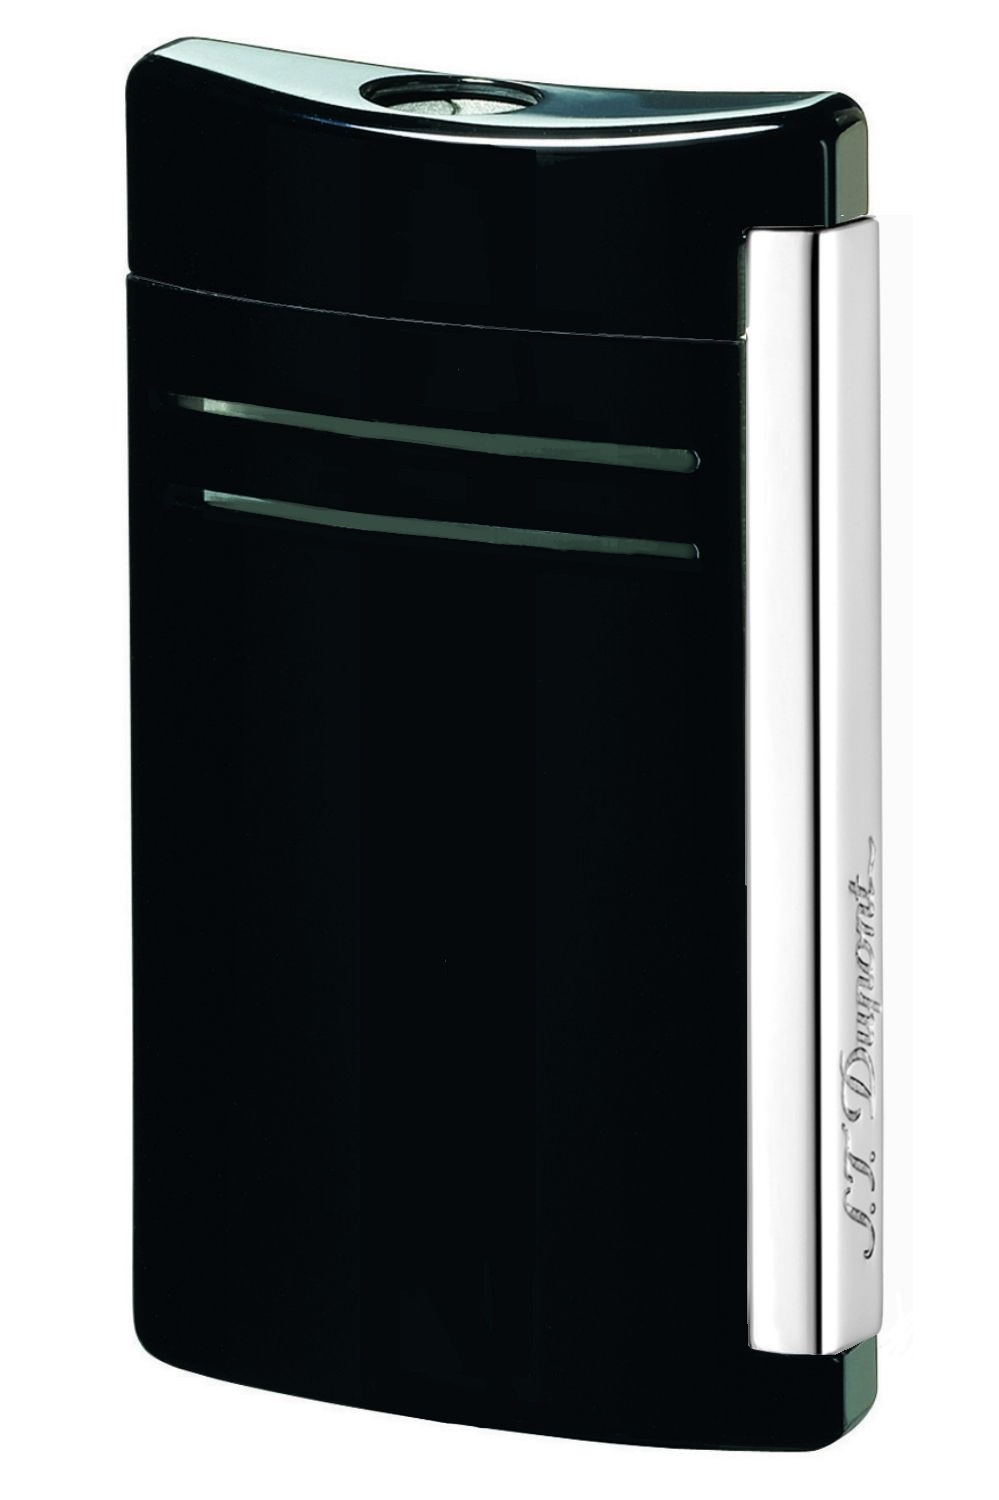 S.T Dupont Feuerzeug MaxiJet schwarz glänzend mit Jetflamme Set Gas